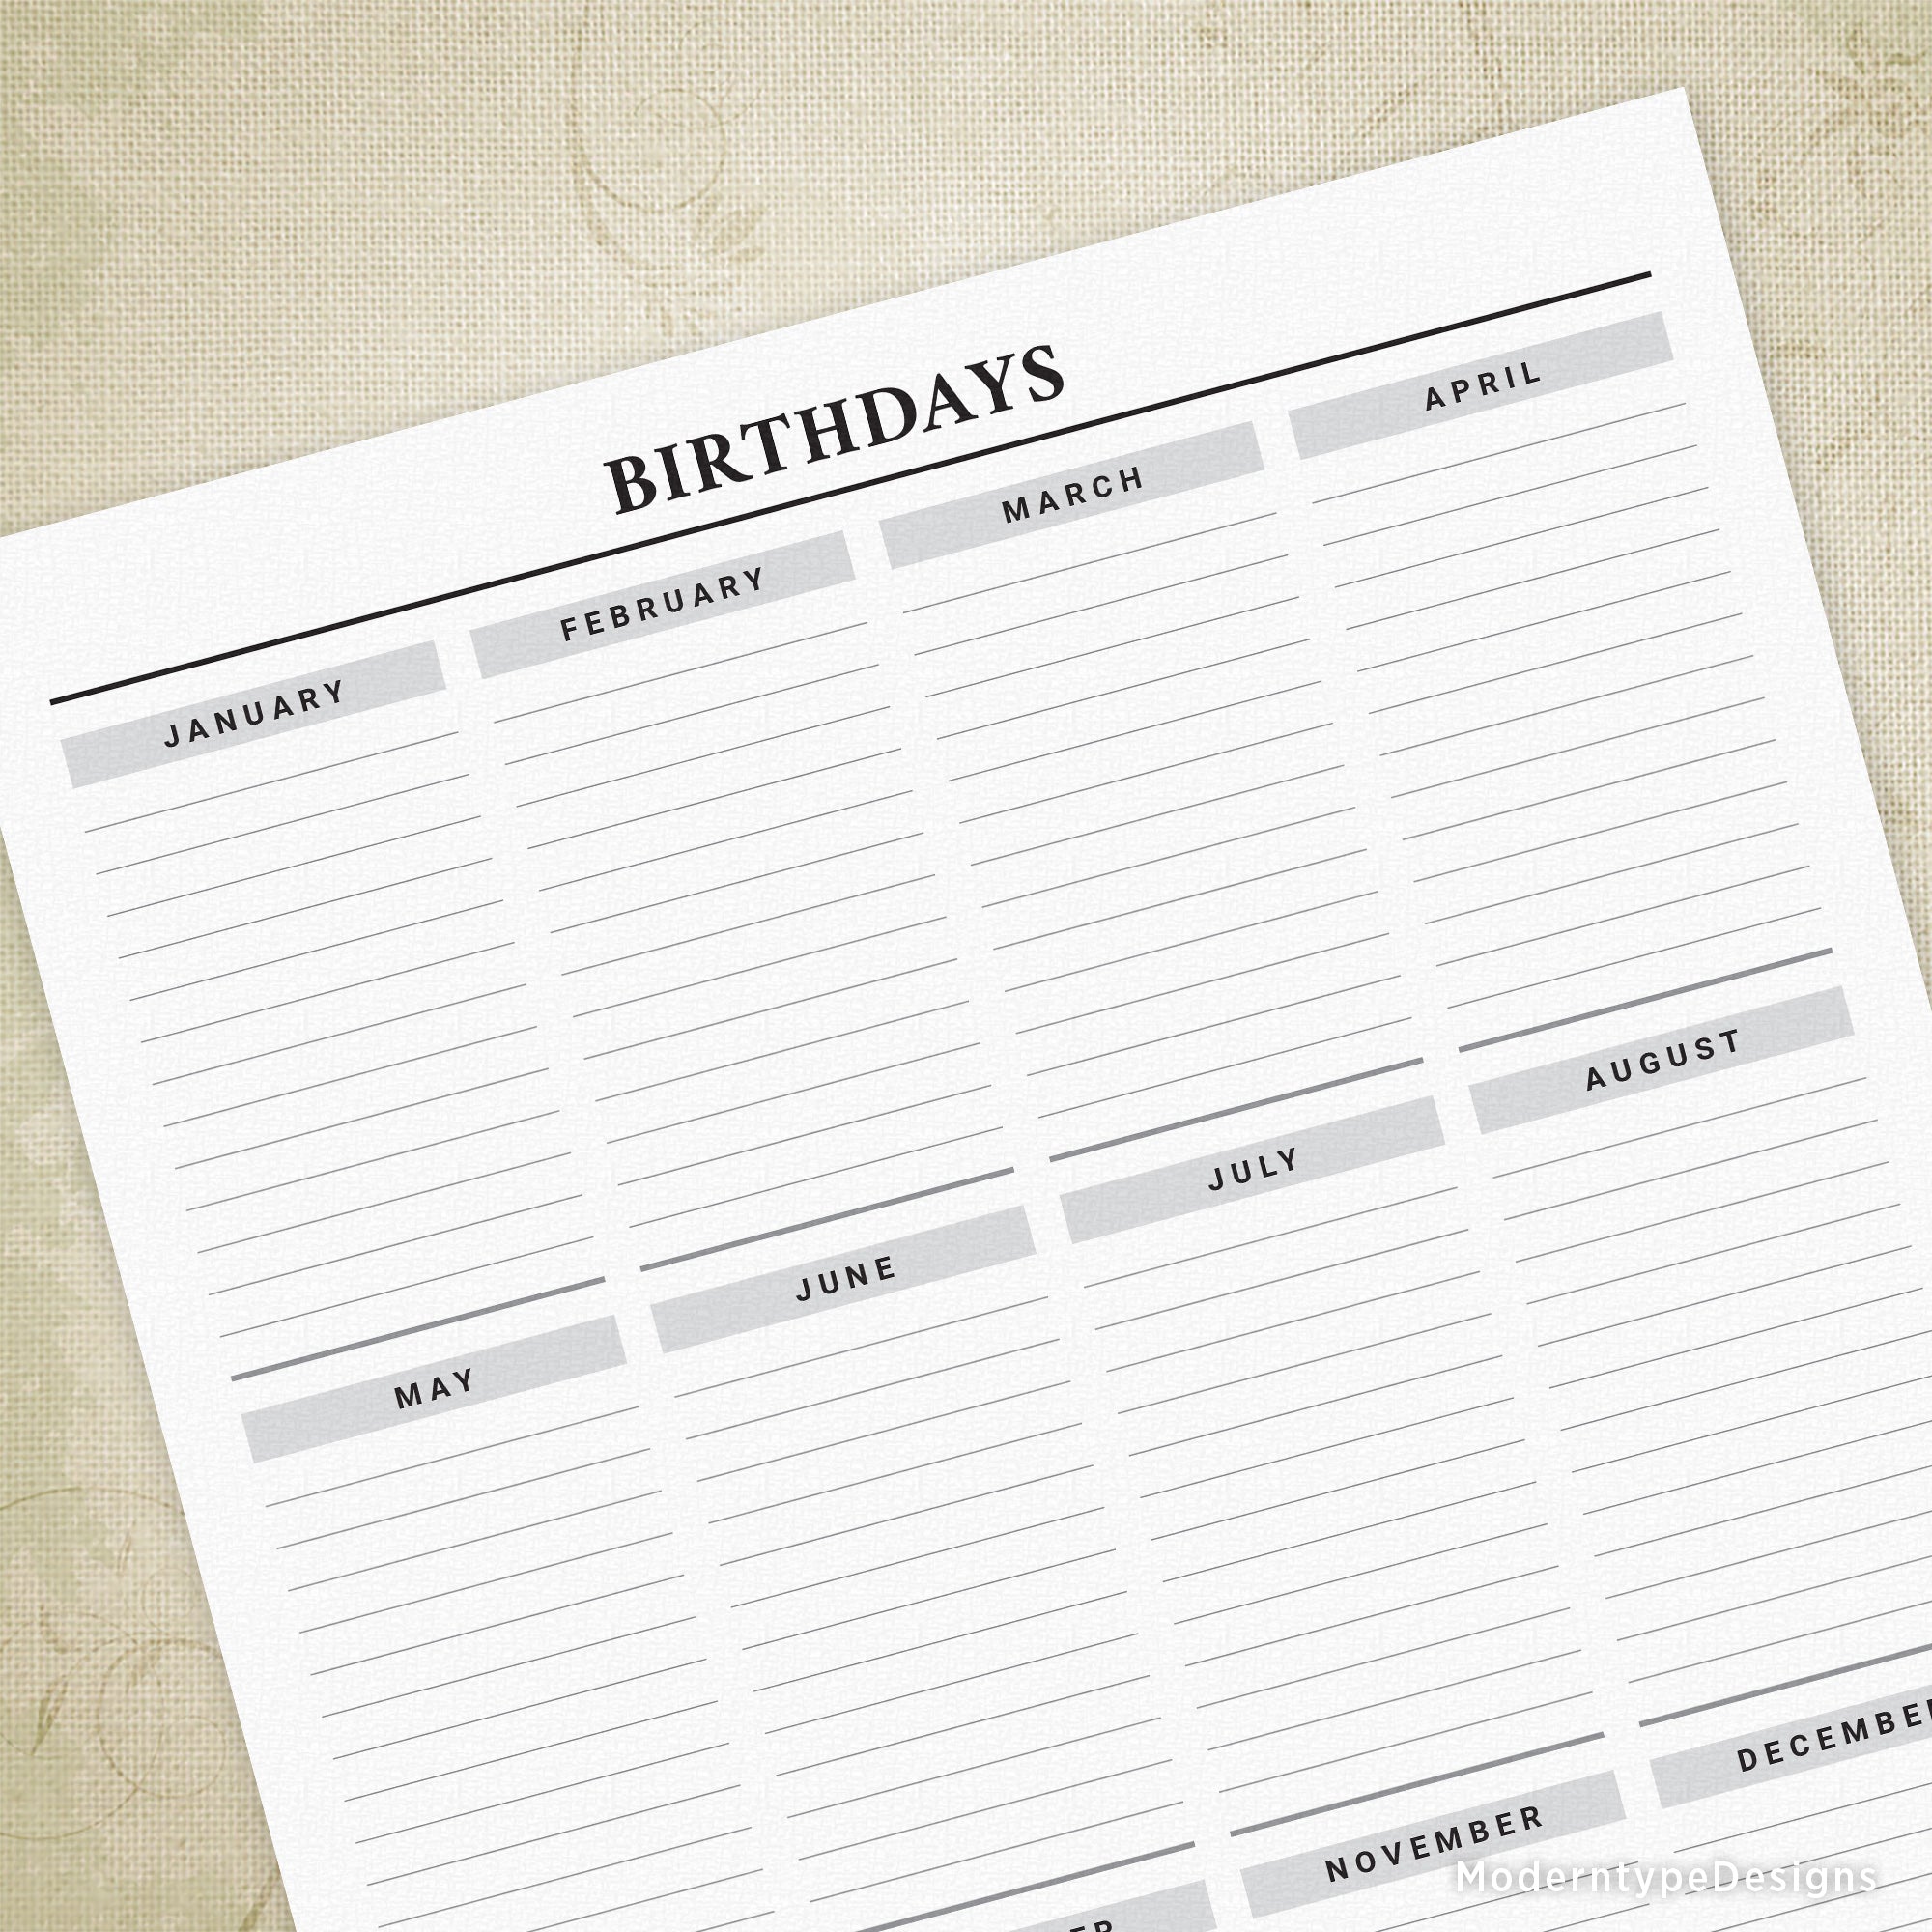 Birthdays Calendar Printable